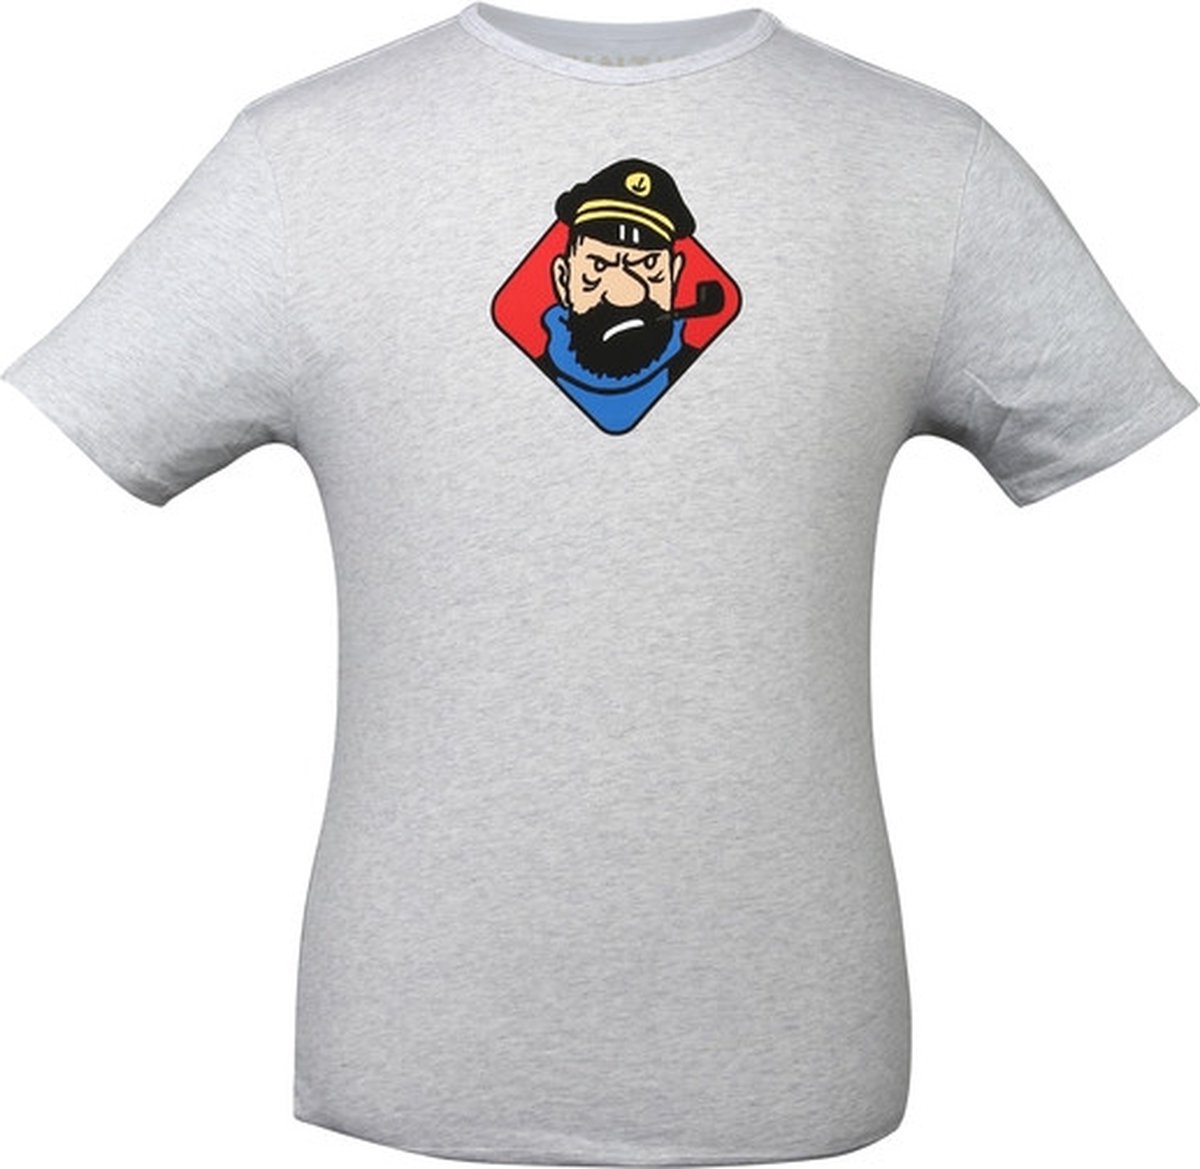 Kuifje T-shirt - Haddock - Officieel Kuifje T-Shirt - XL - Haddock voorkant en tekst achterkant - Licht Grijs